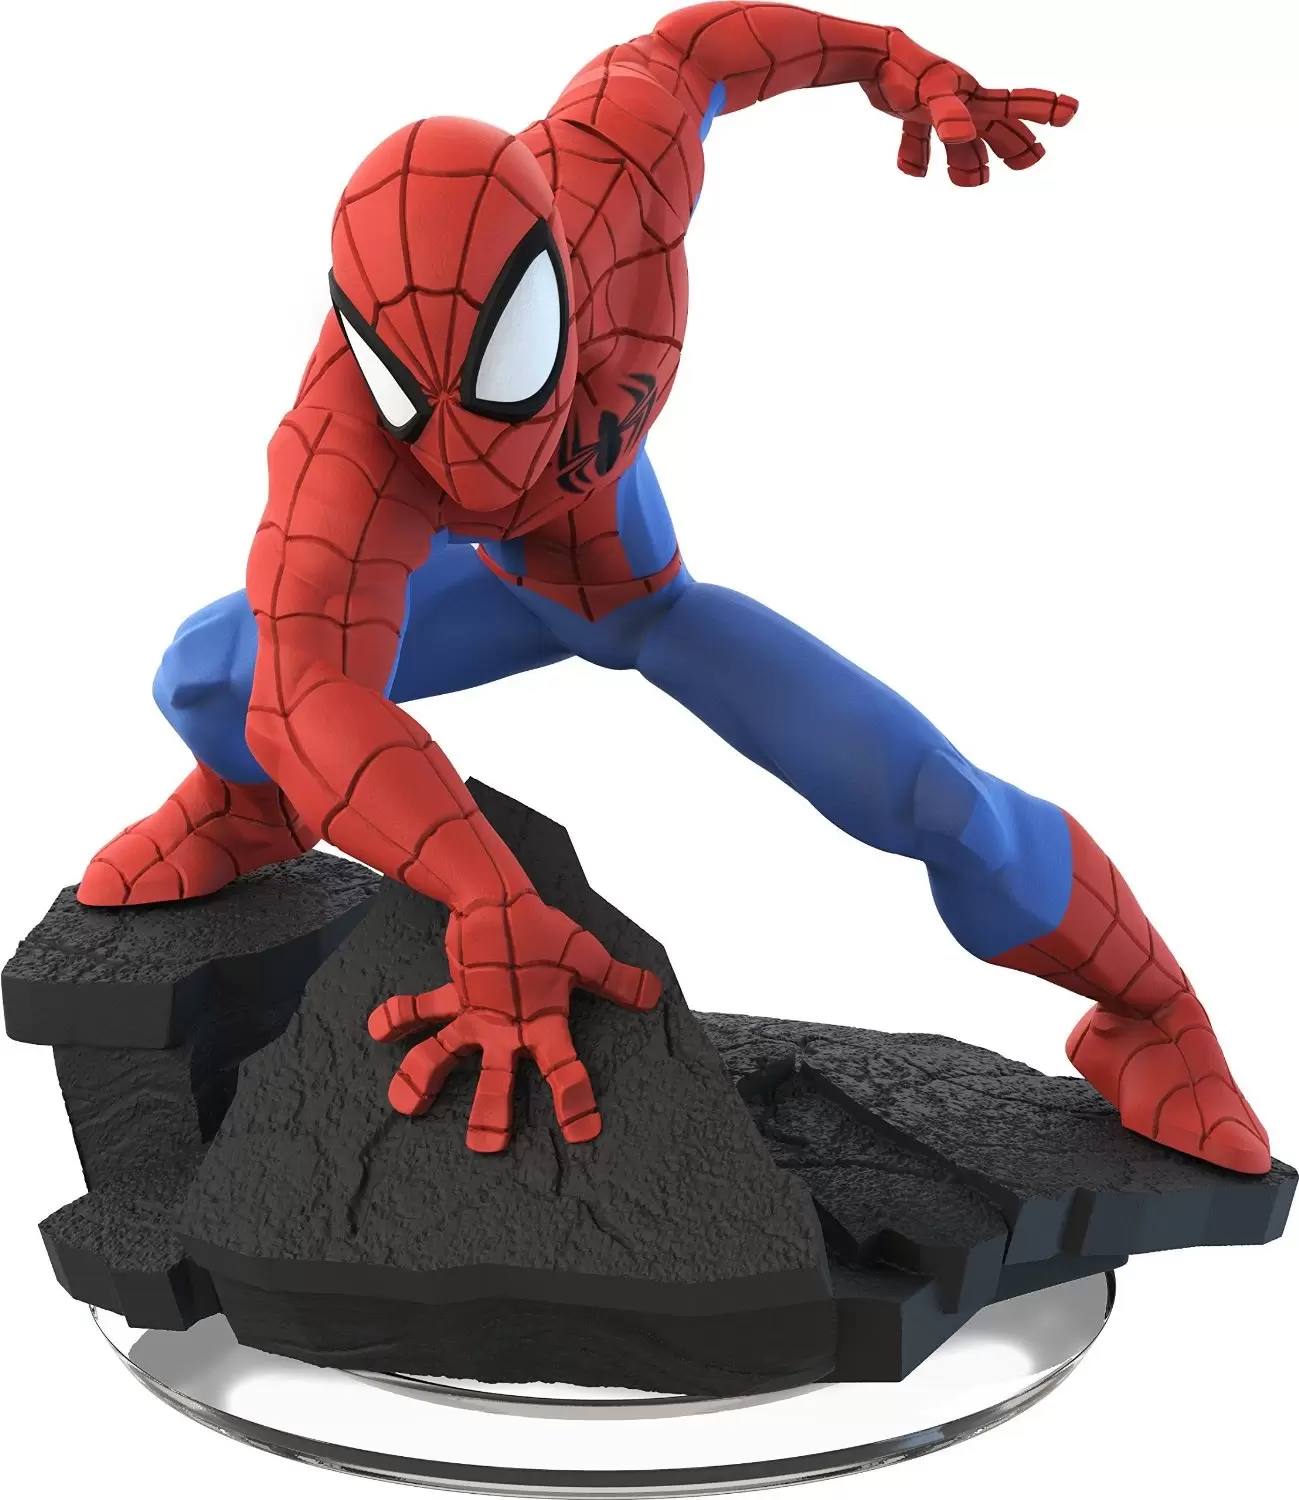 Disney Infinity Action figures - Spider-Man